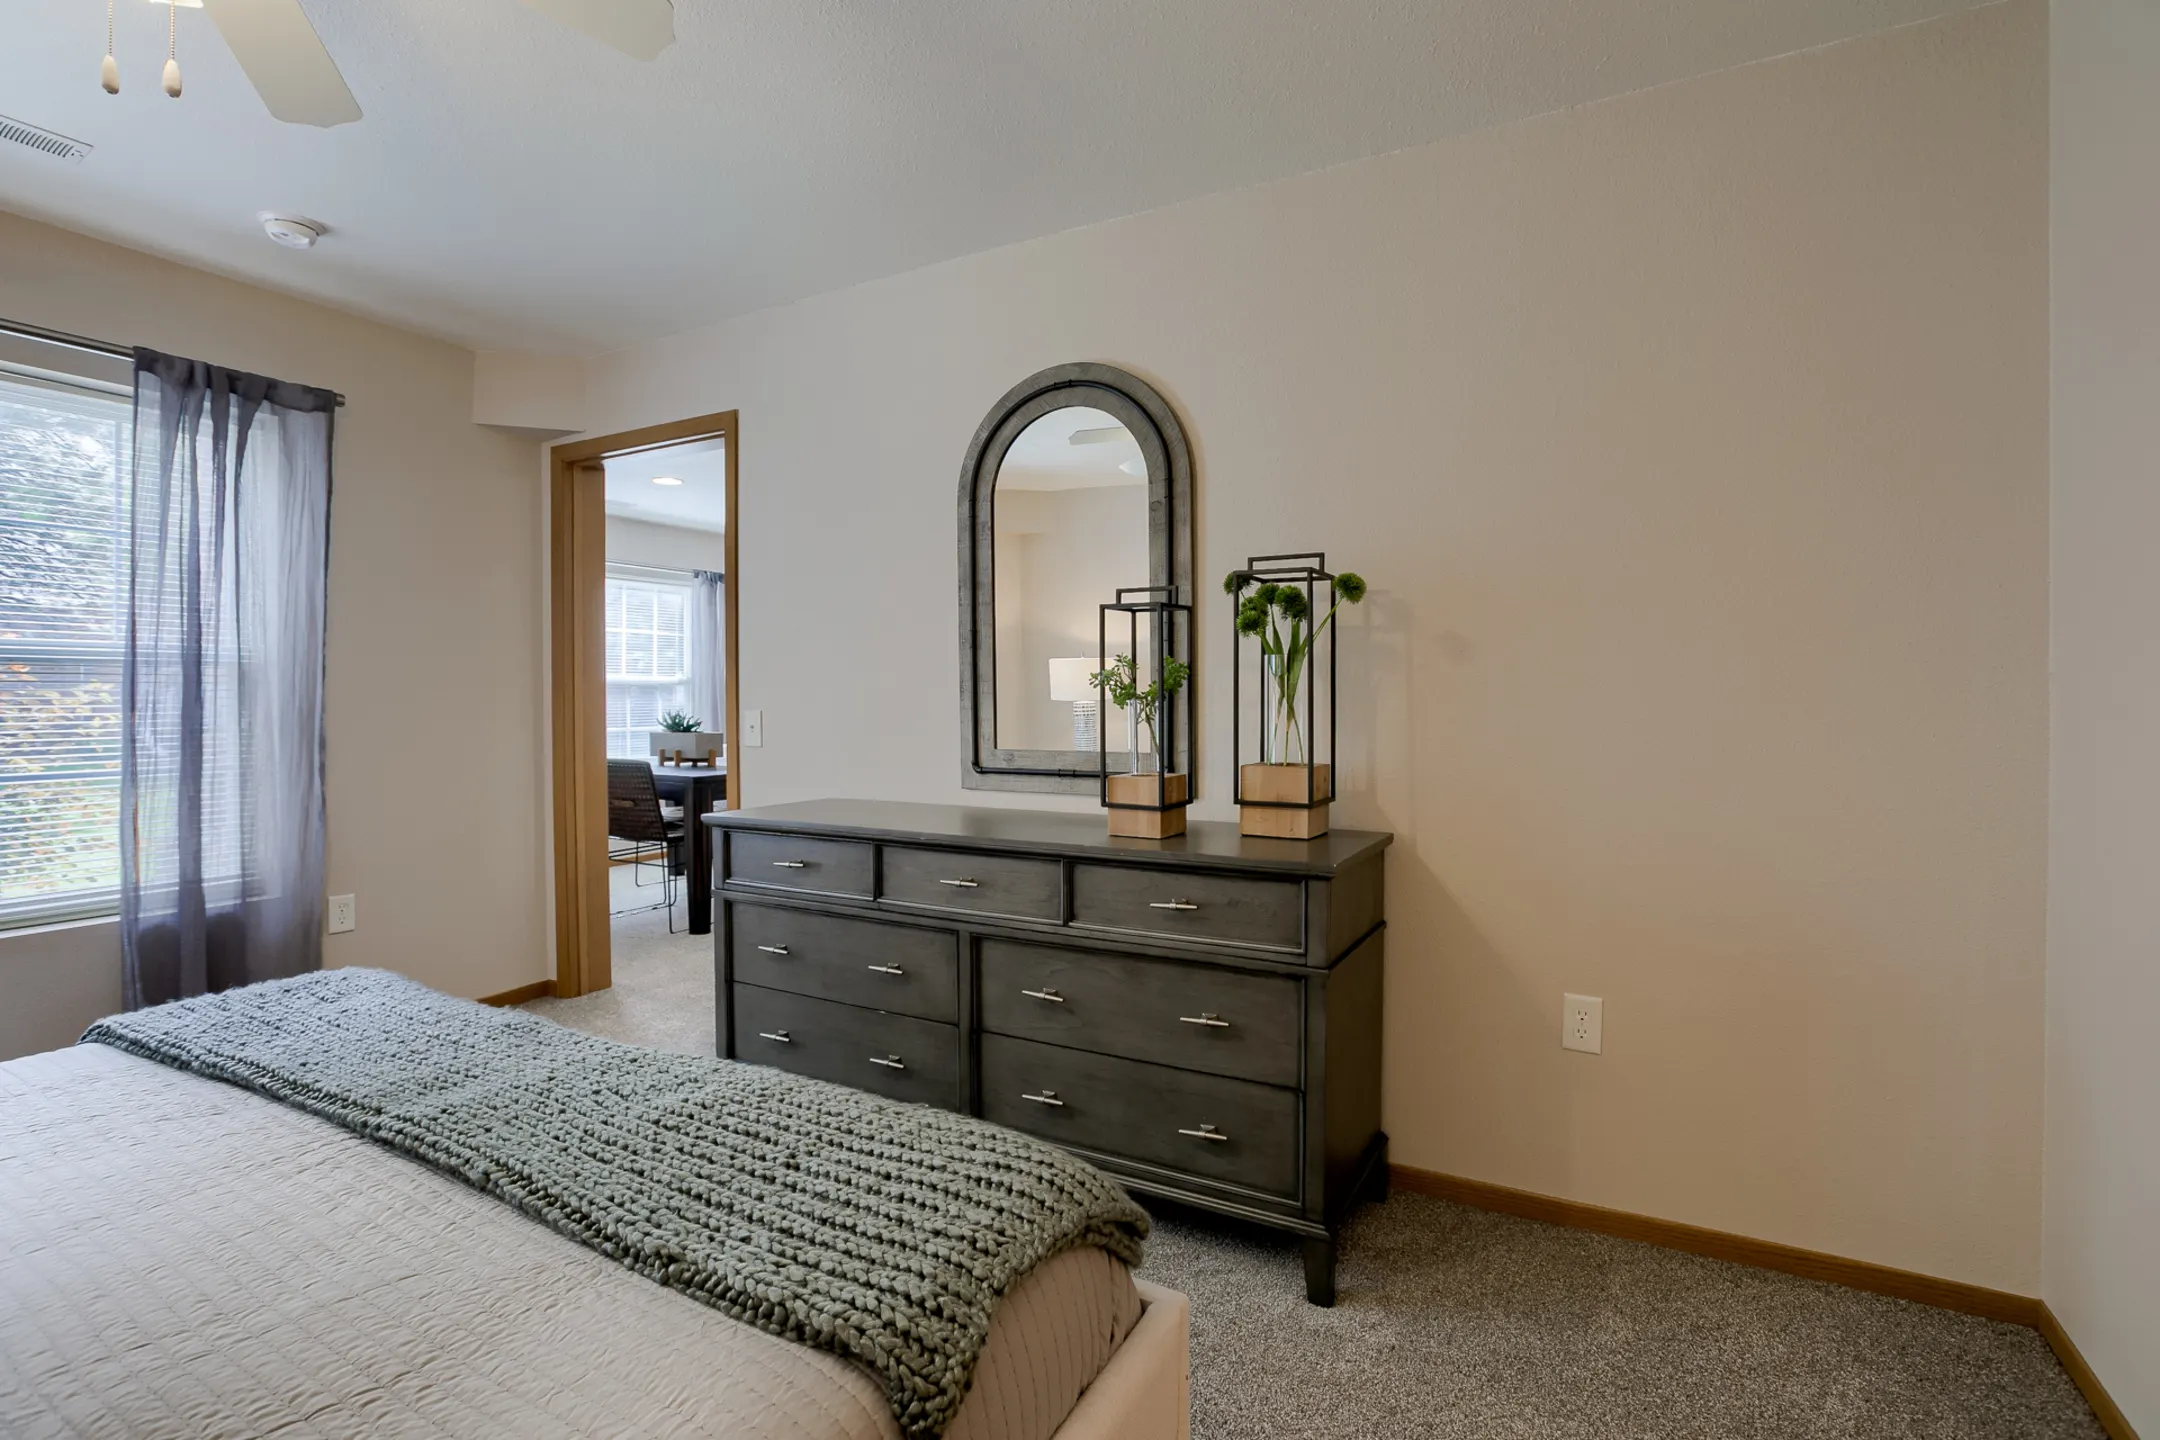 Bedroom - Tranquility Pointe - Omaha, NE